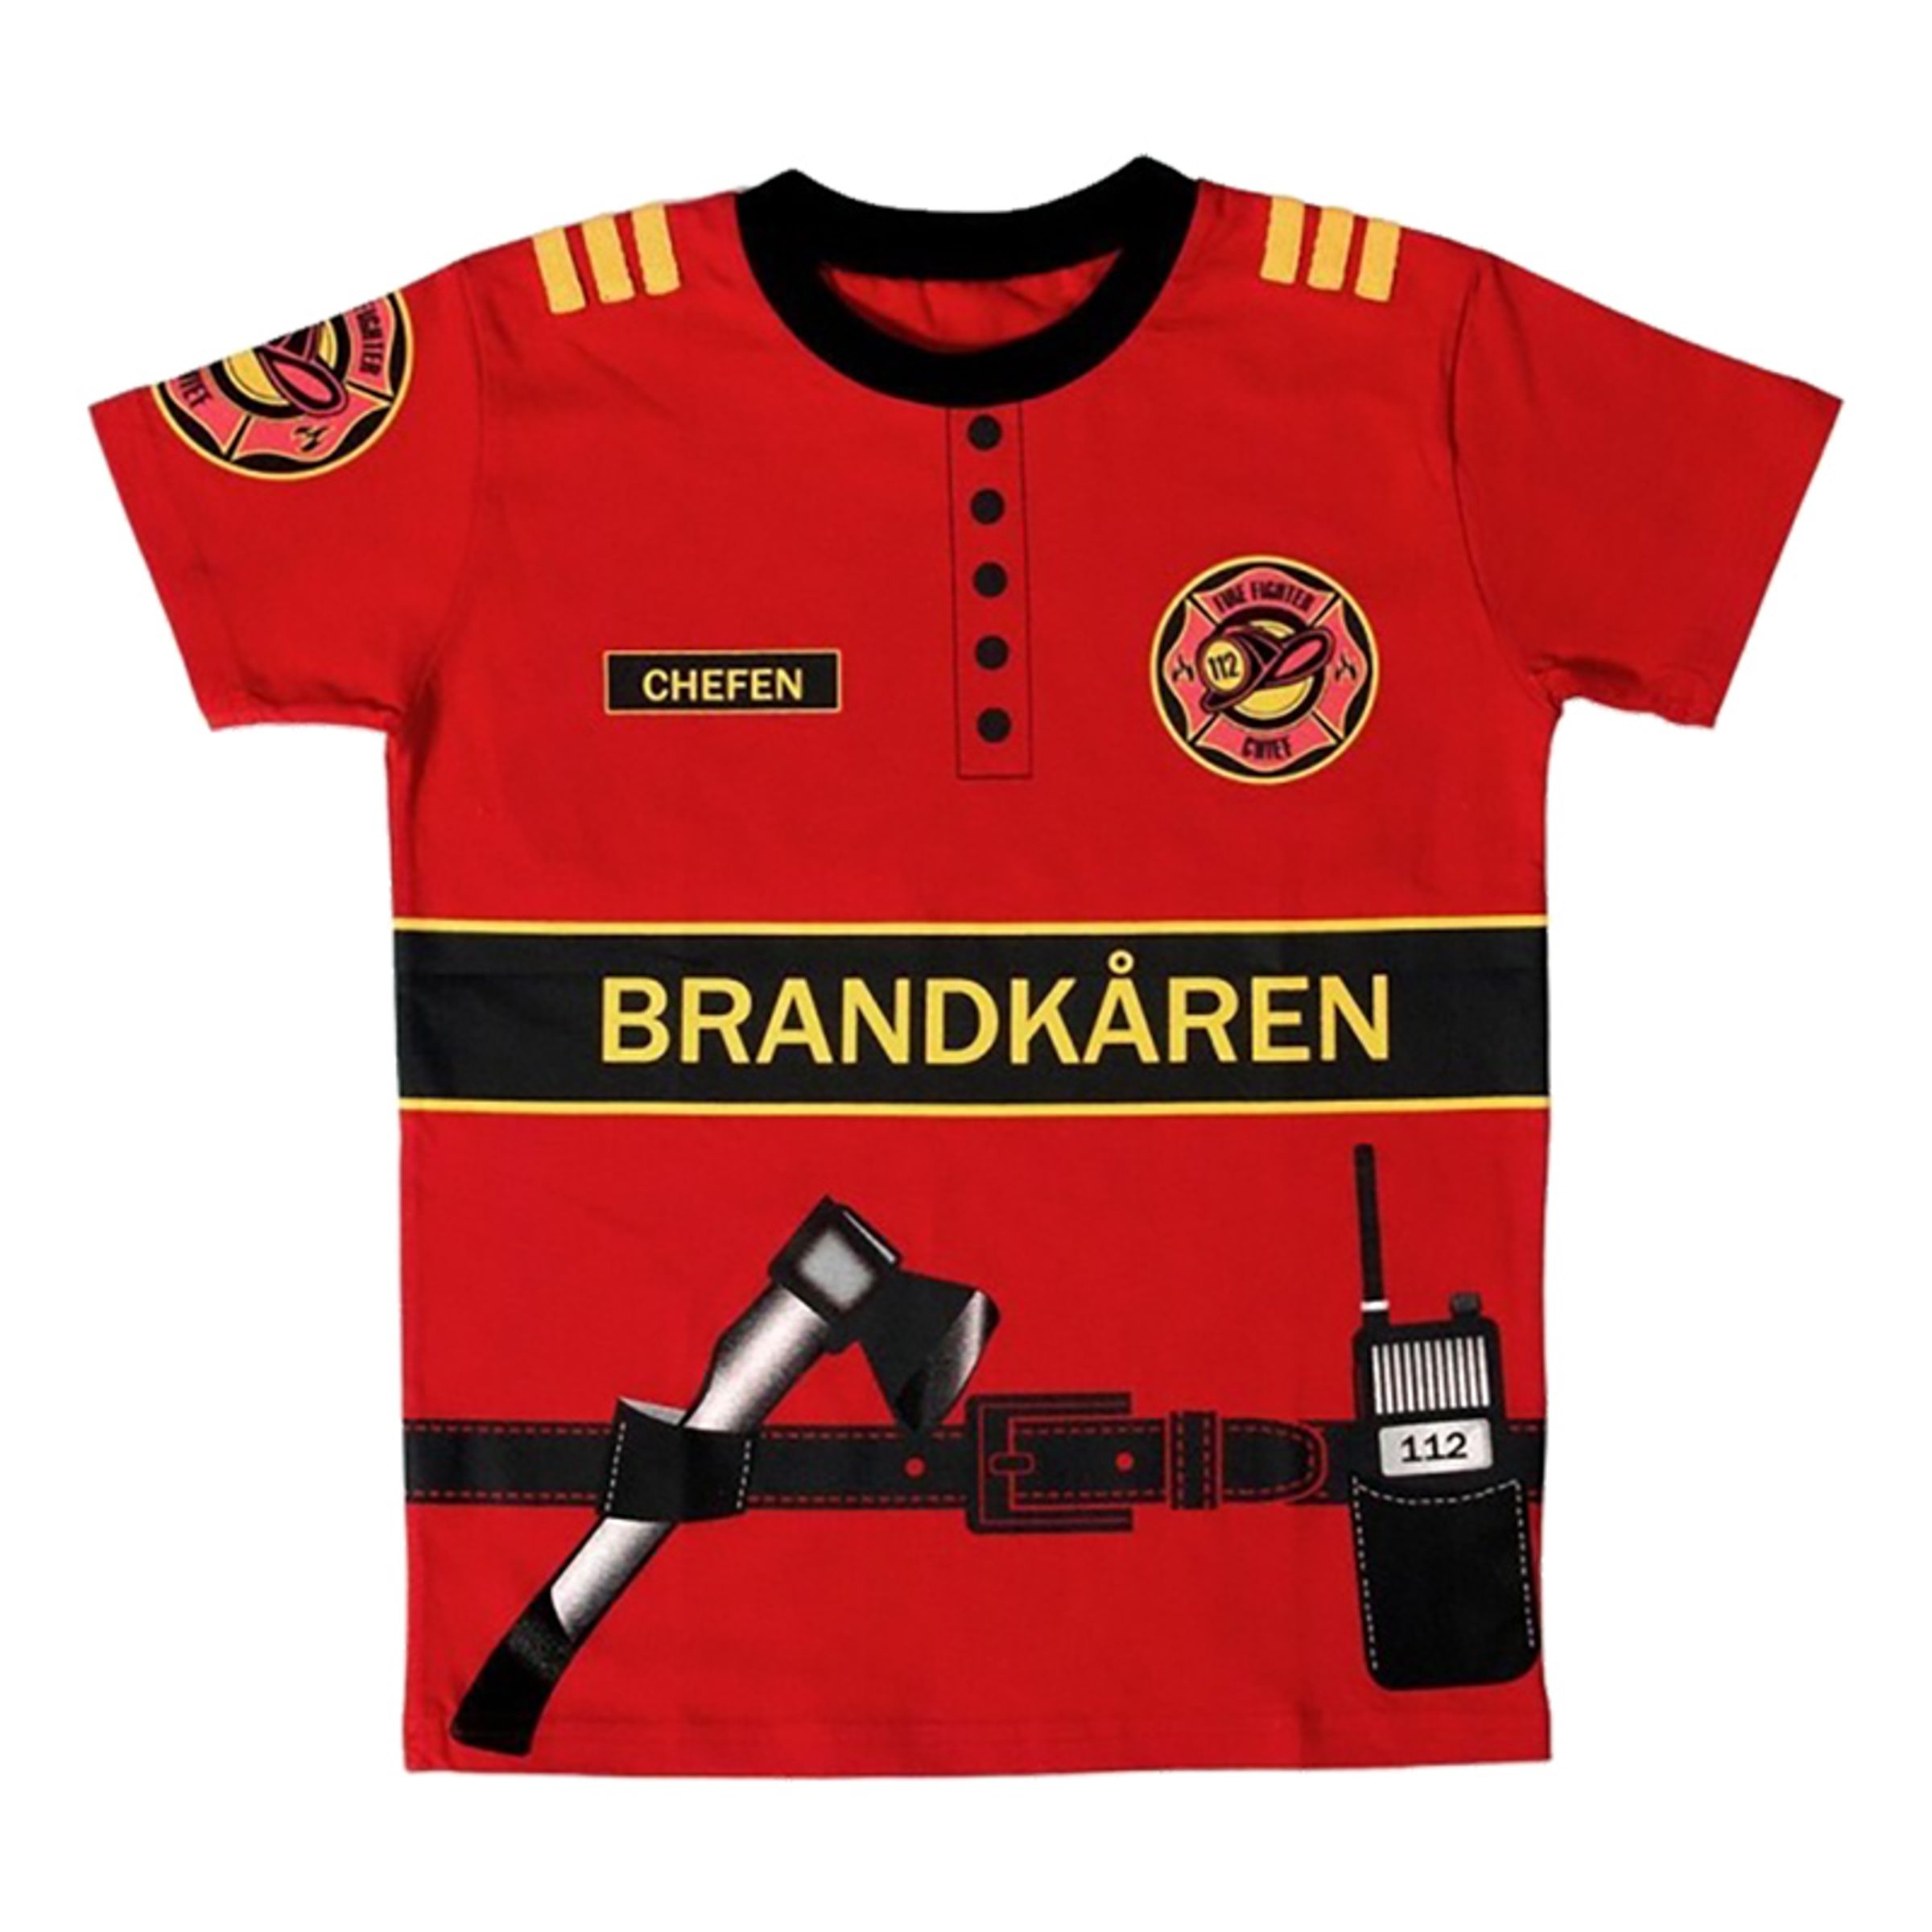 Brandman Barn T-shirt - Small